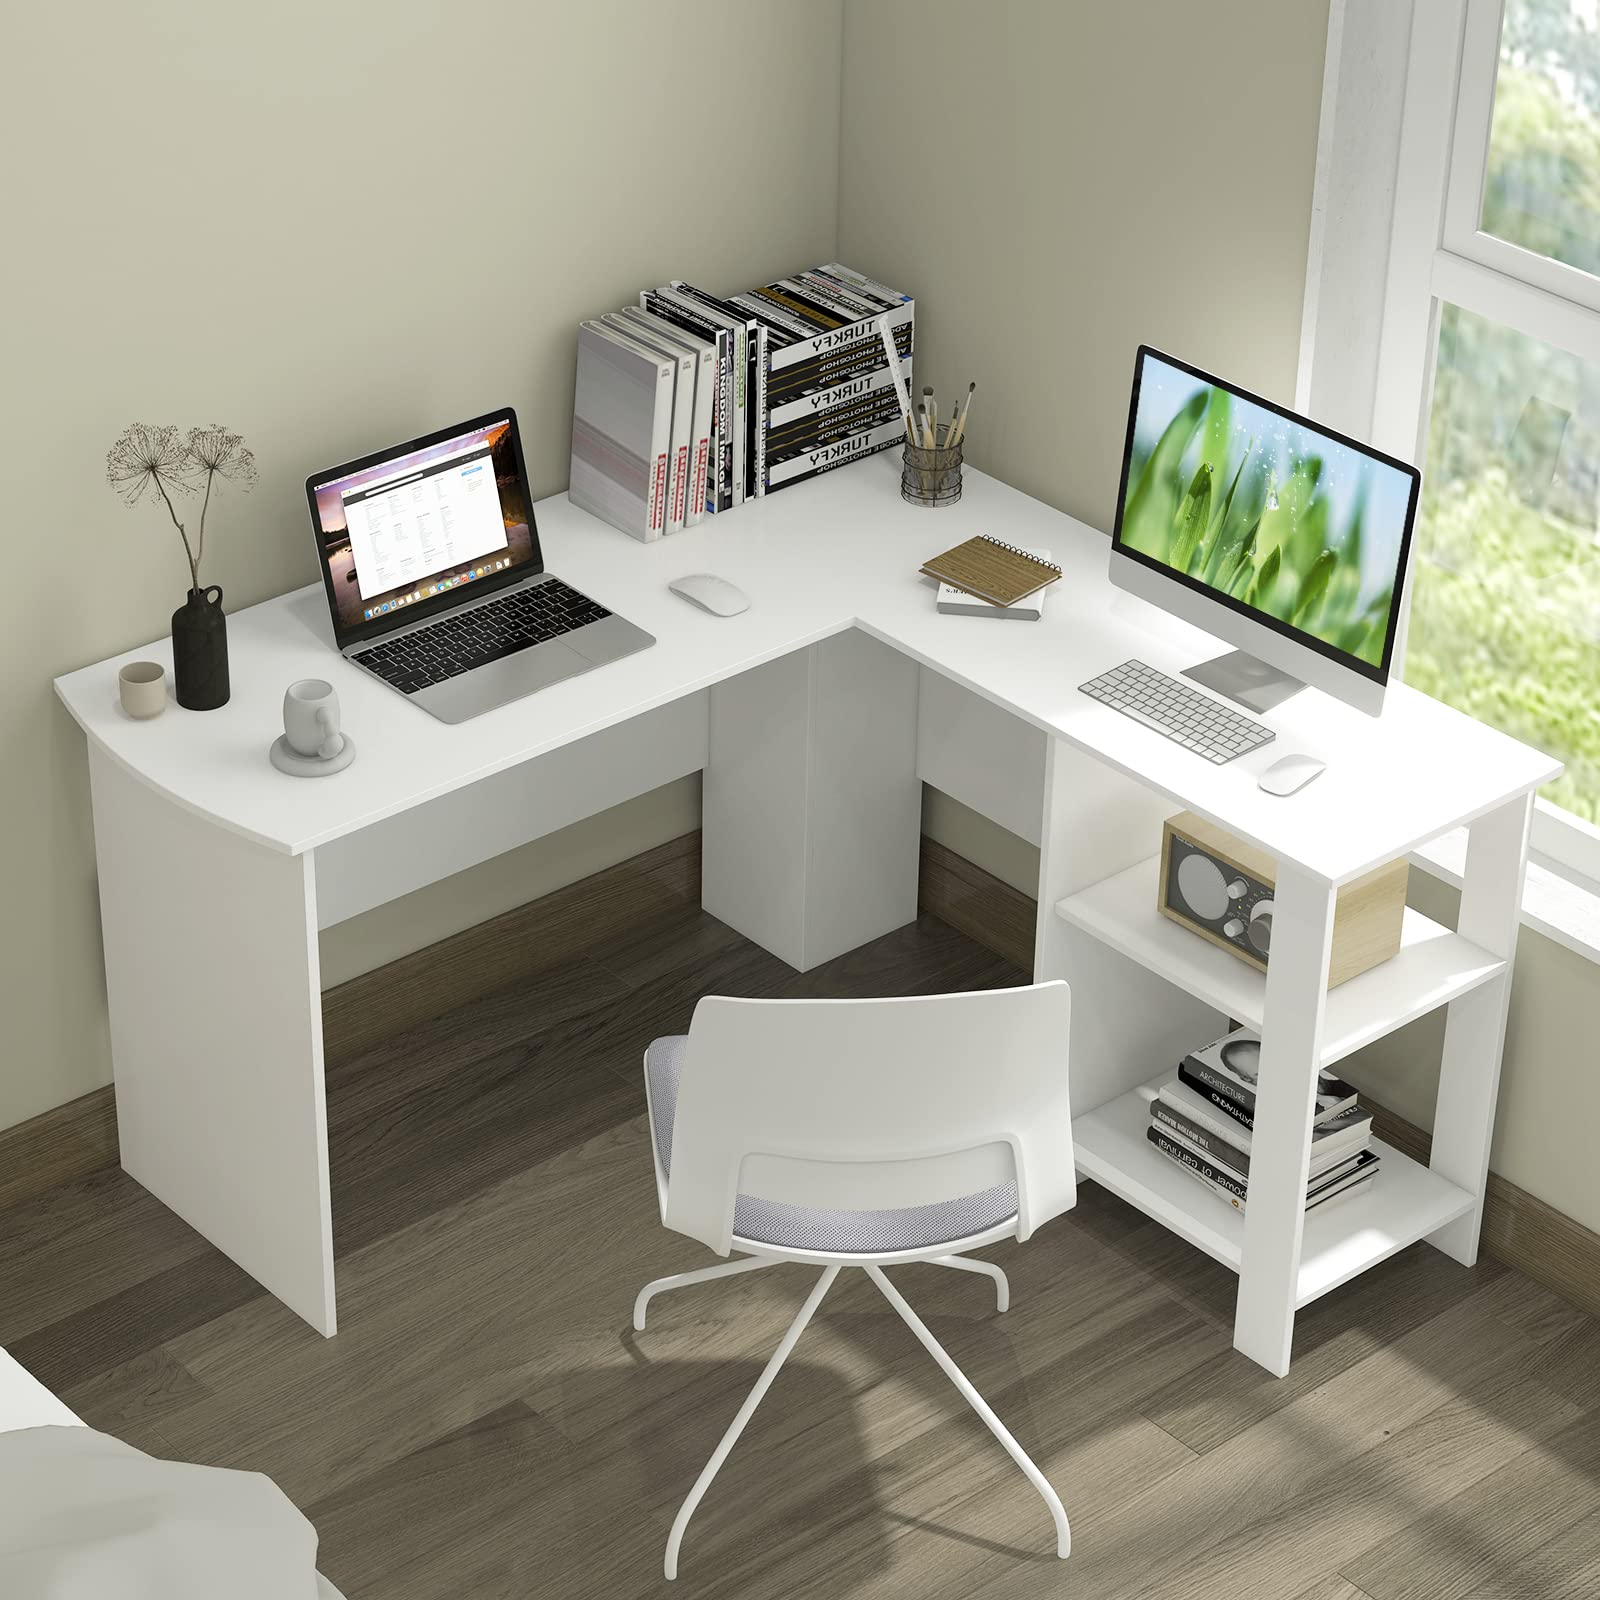 Giantex L Shaped Computer Desk, 51" Large Corner Desk with 2 Cable Holes & 2 Storage Shelves, White